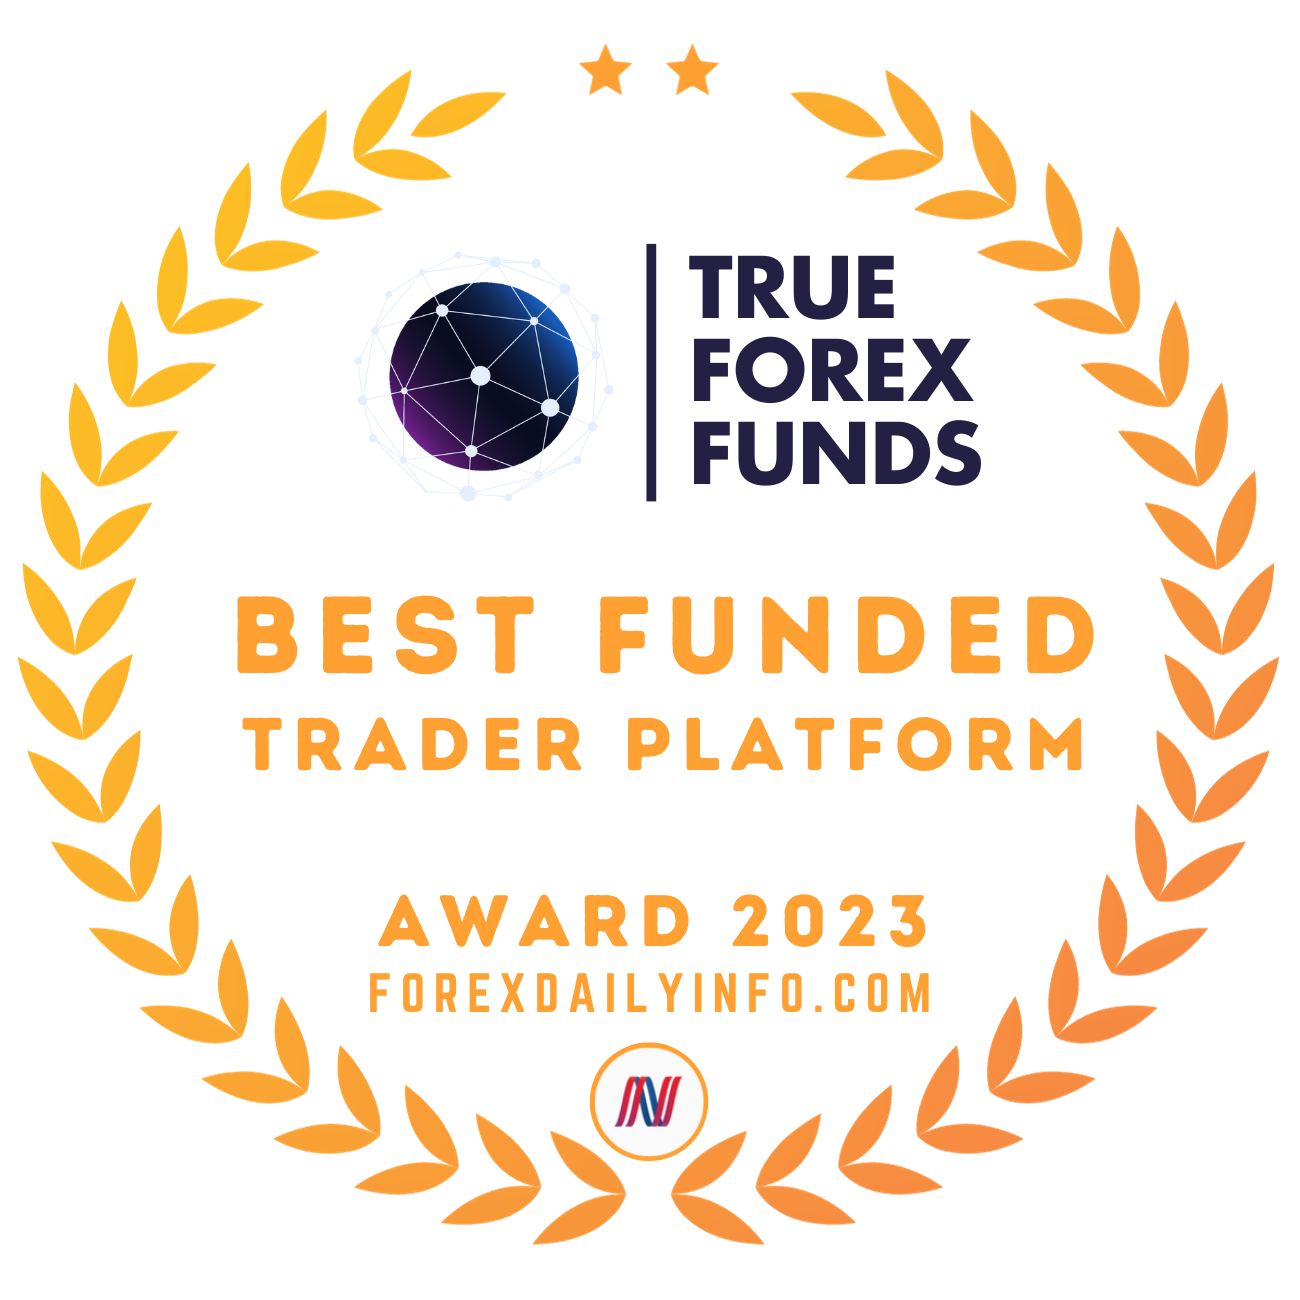 True Forex Funds Awarded the Best Funded Trader Platform Award 2023